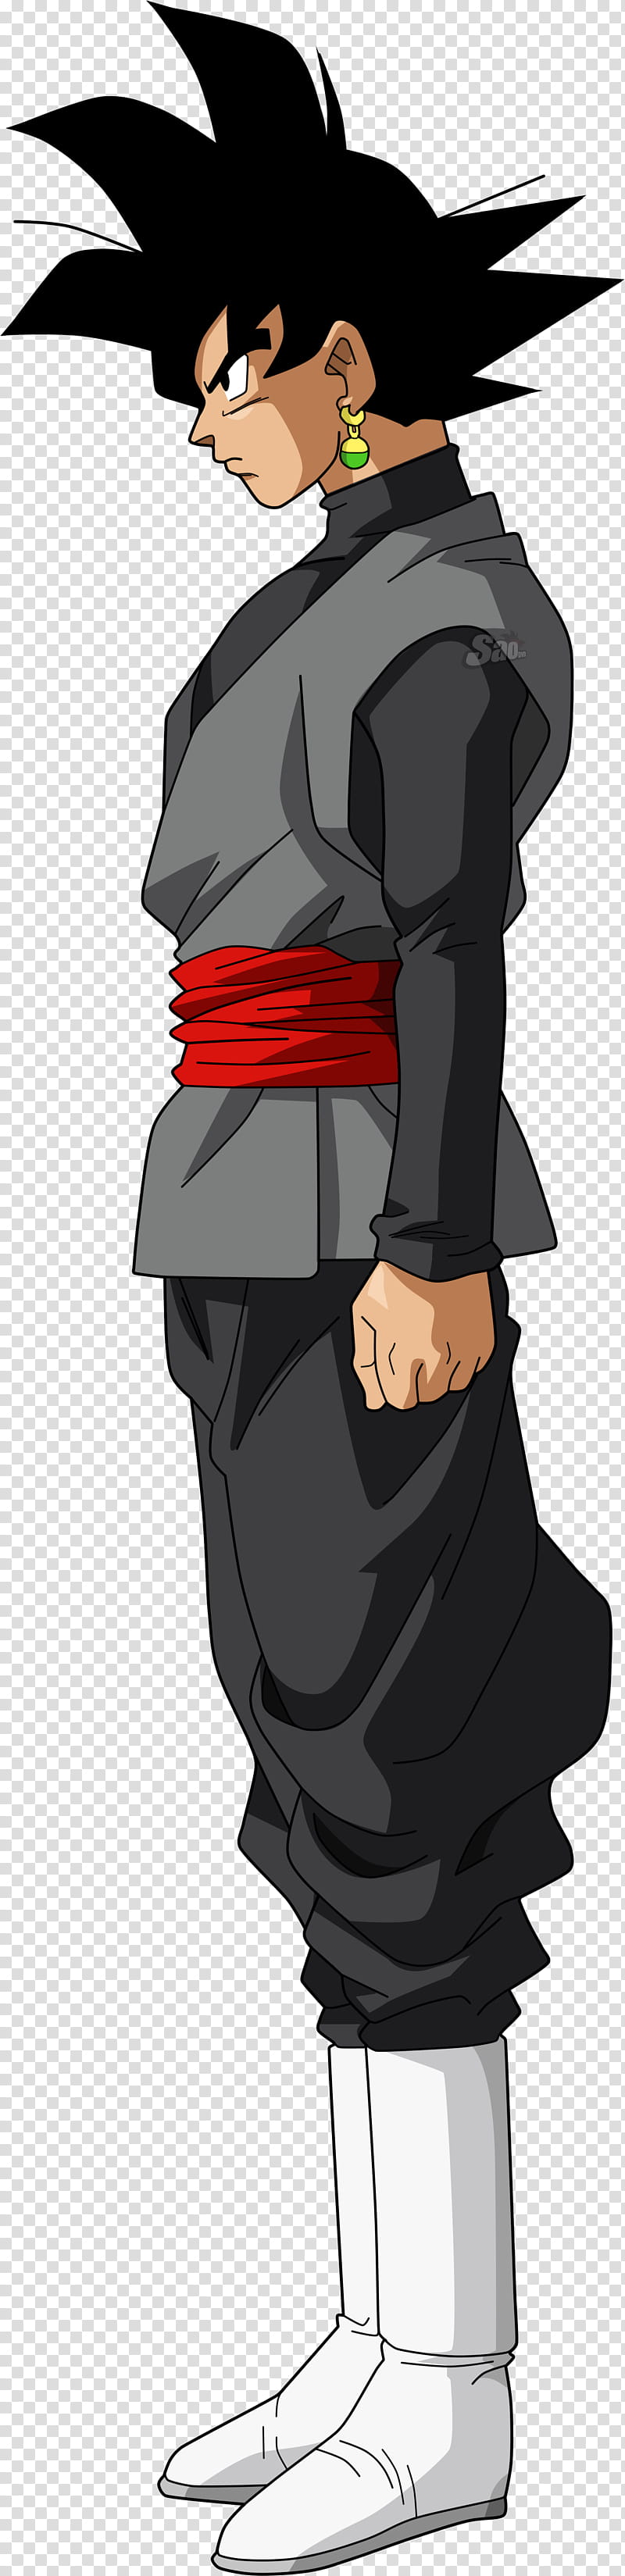 Goku Black de Perfil, black Son Goku standing transparent background PNG  clipart | HiClipart